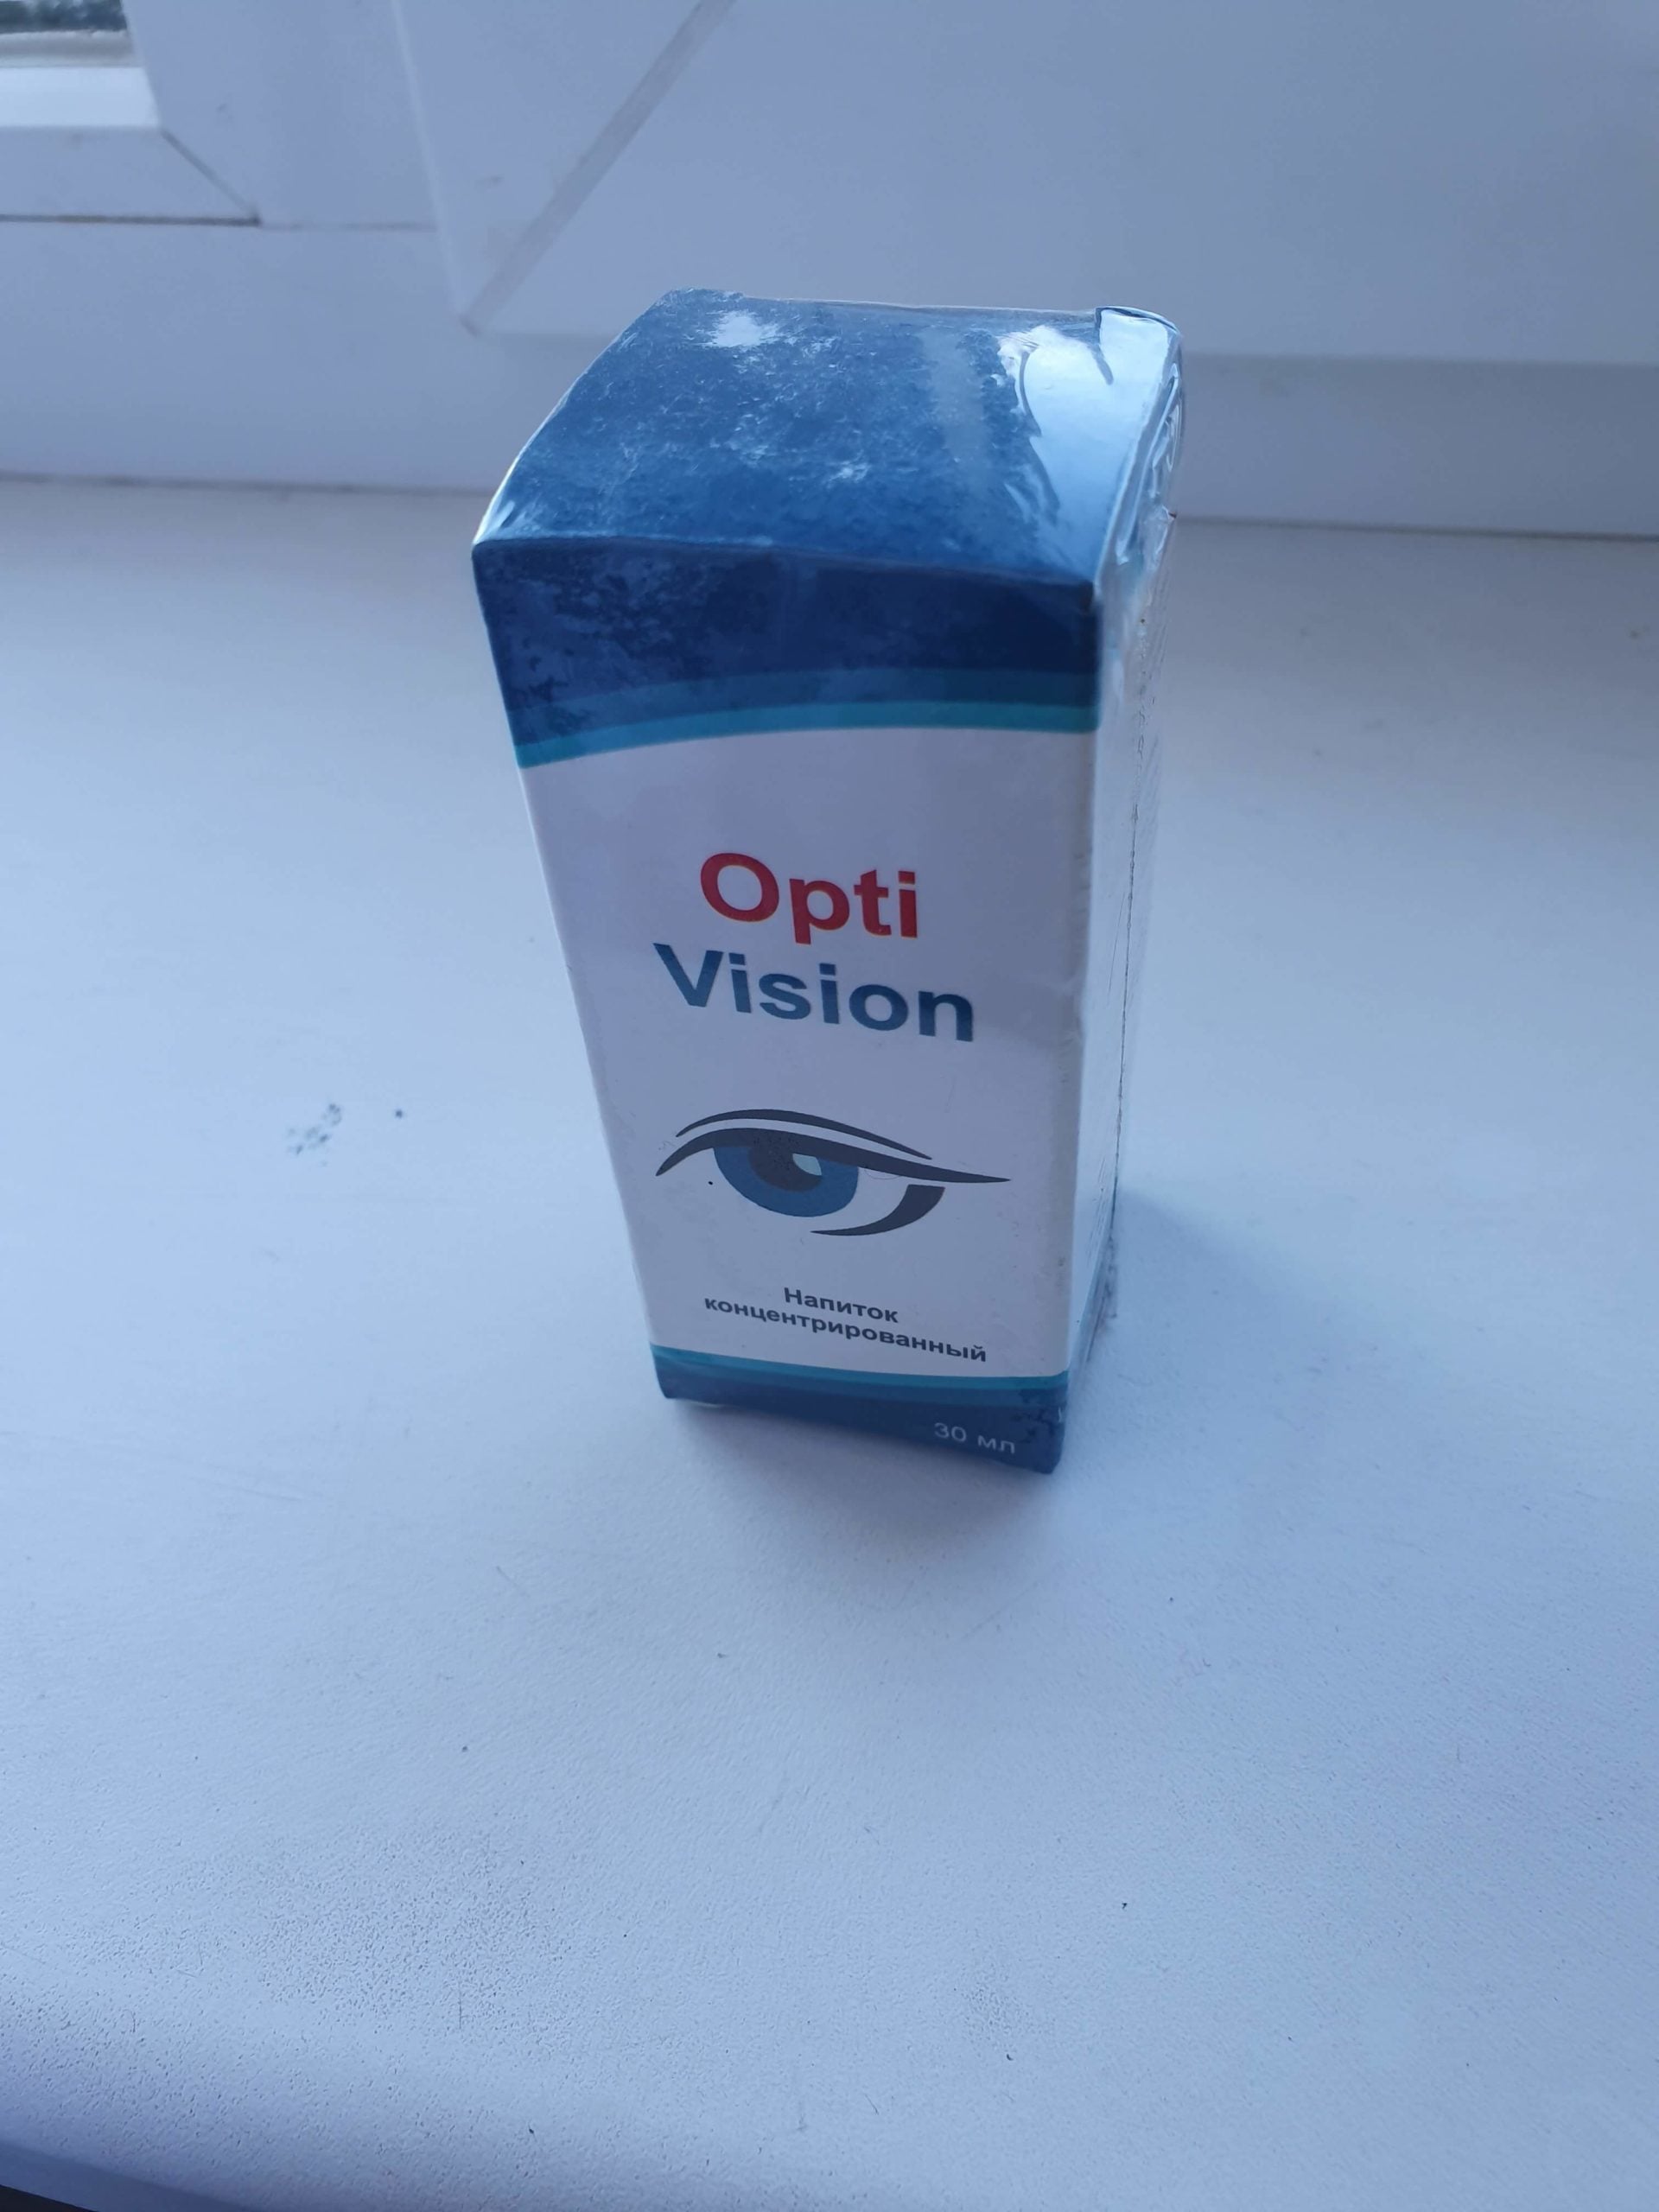 ActiVision dan optivision untuk memulihkan penglihatan dan merawat penyakit mata